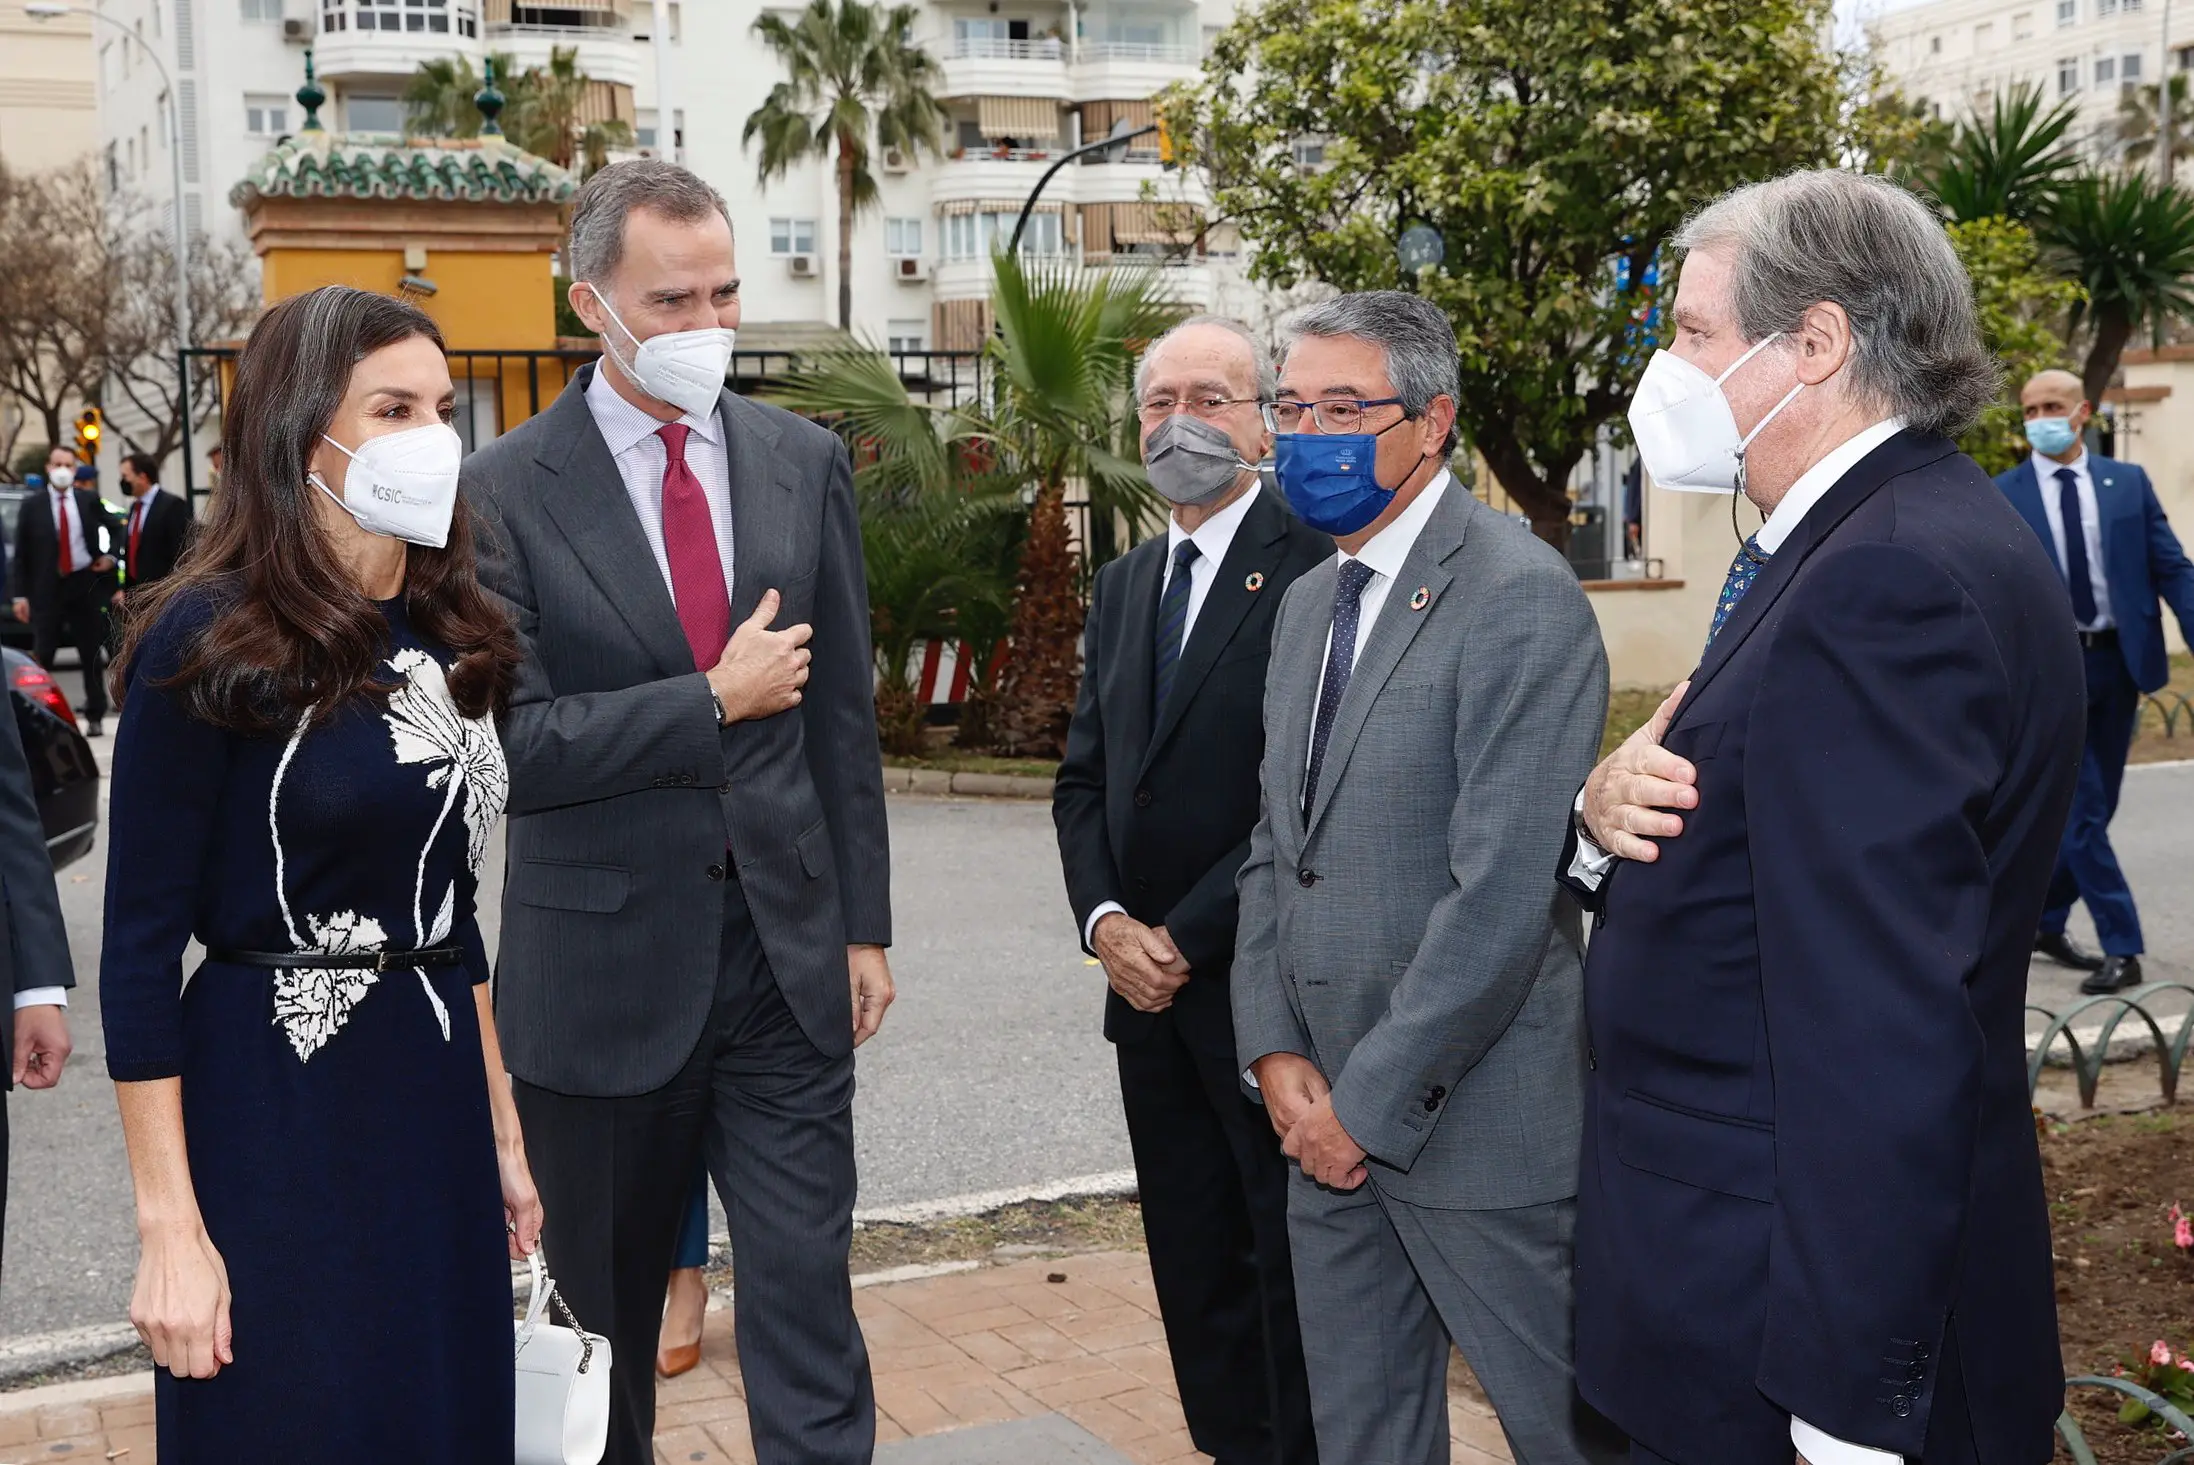 Queen Letizia of Spain wore Galcon Studio Cat Knit Dress to visit Malaga